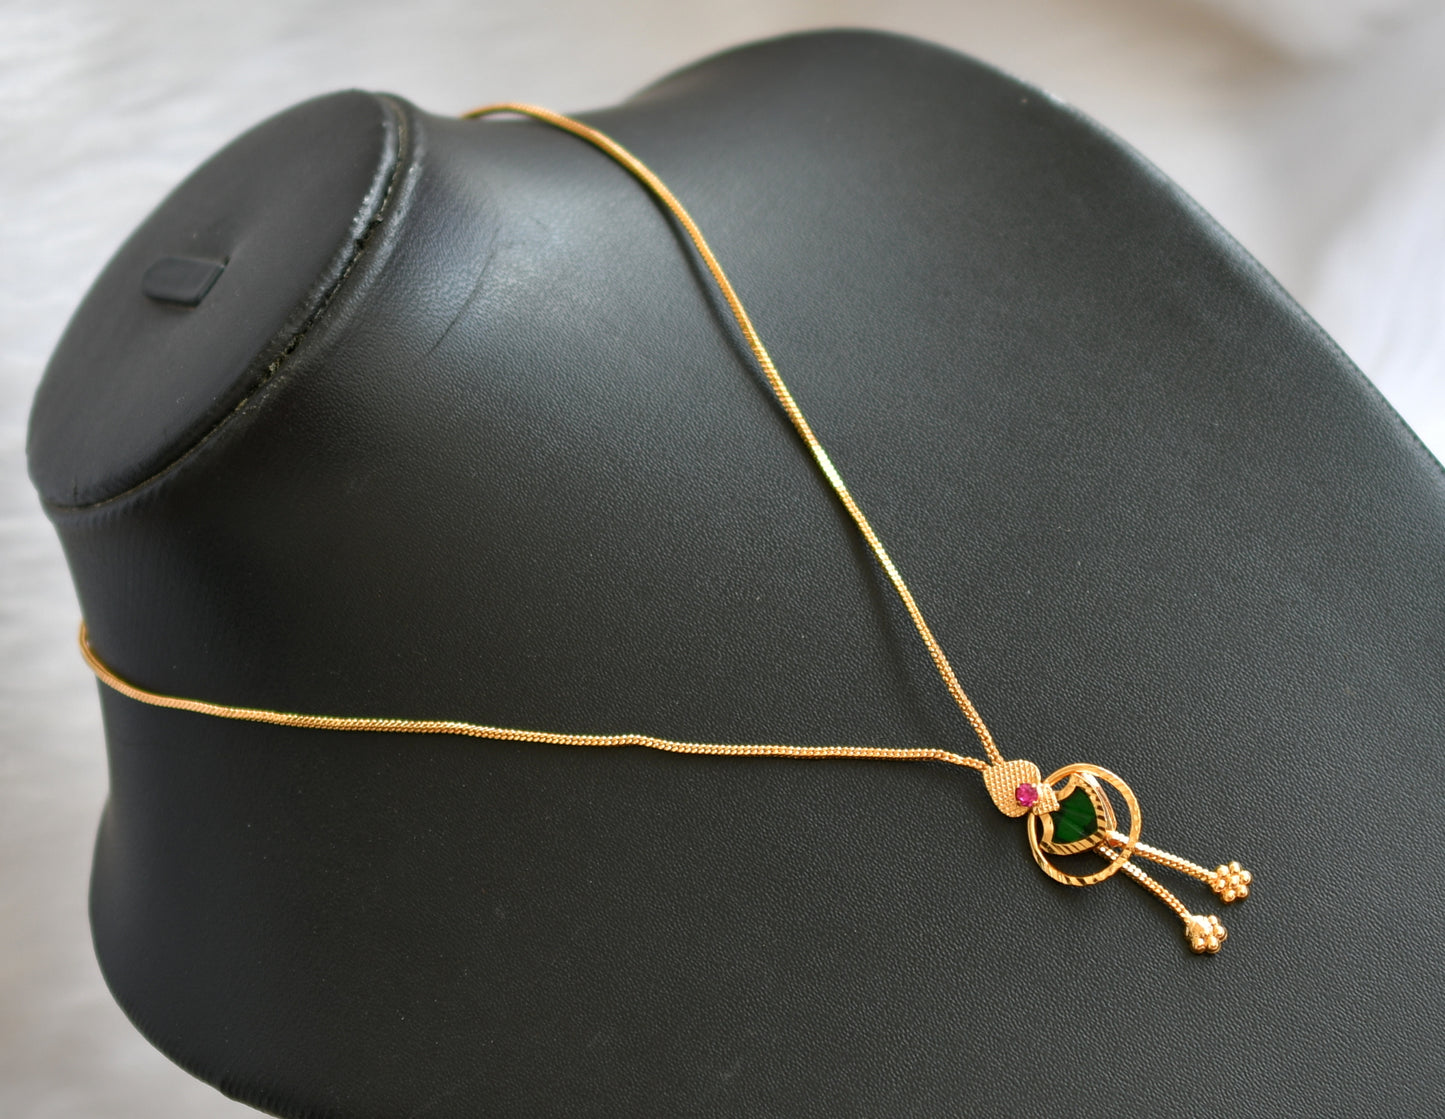 Gold tone pink-green palakka Kerala style pendant with chain dj-39417